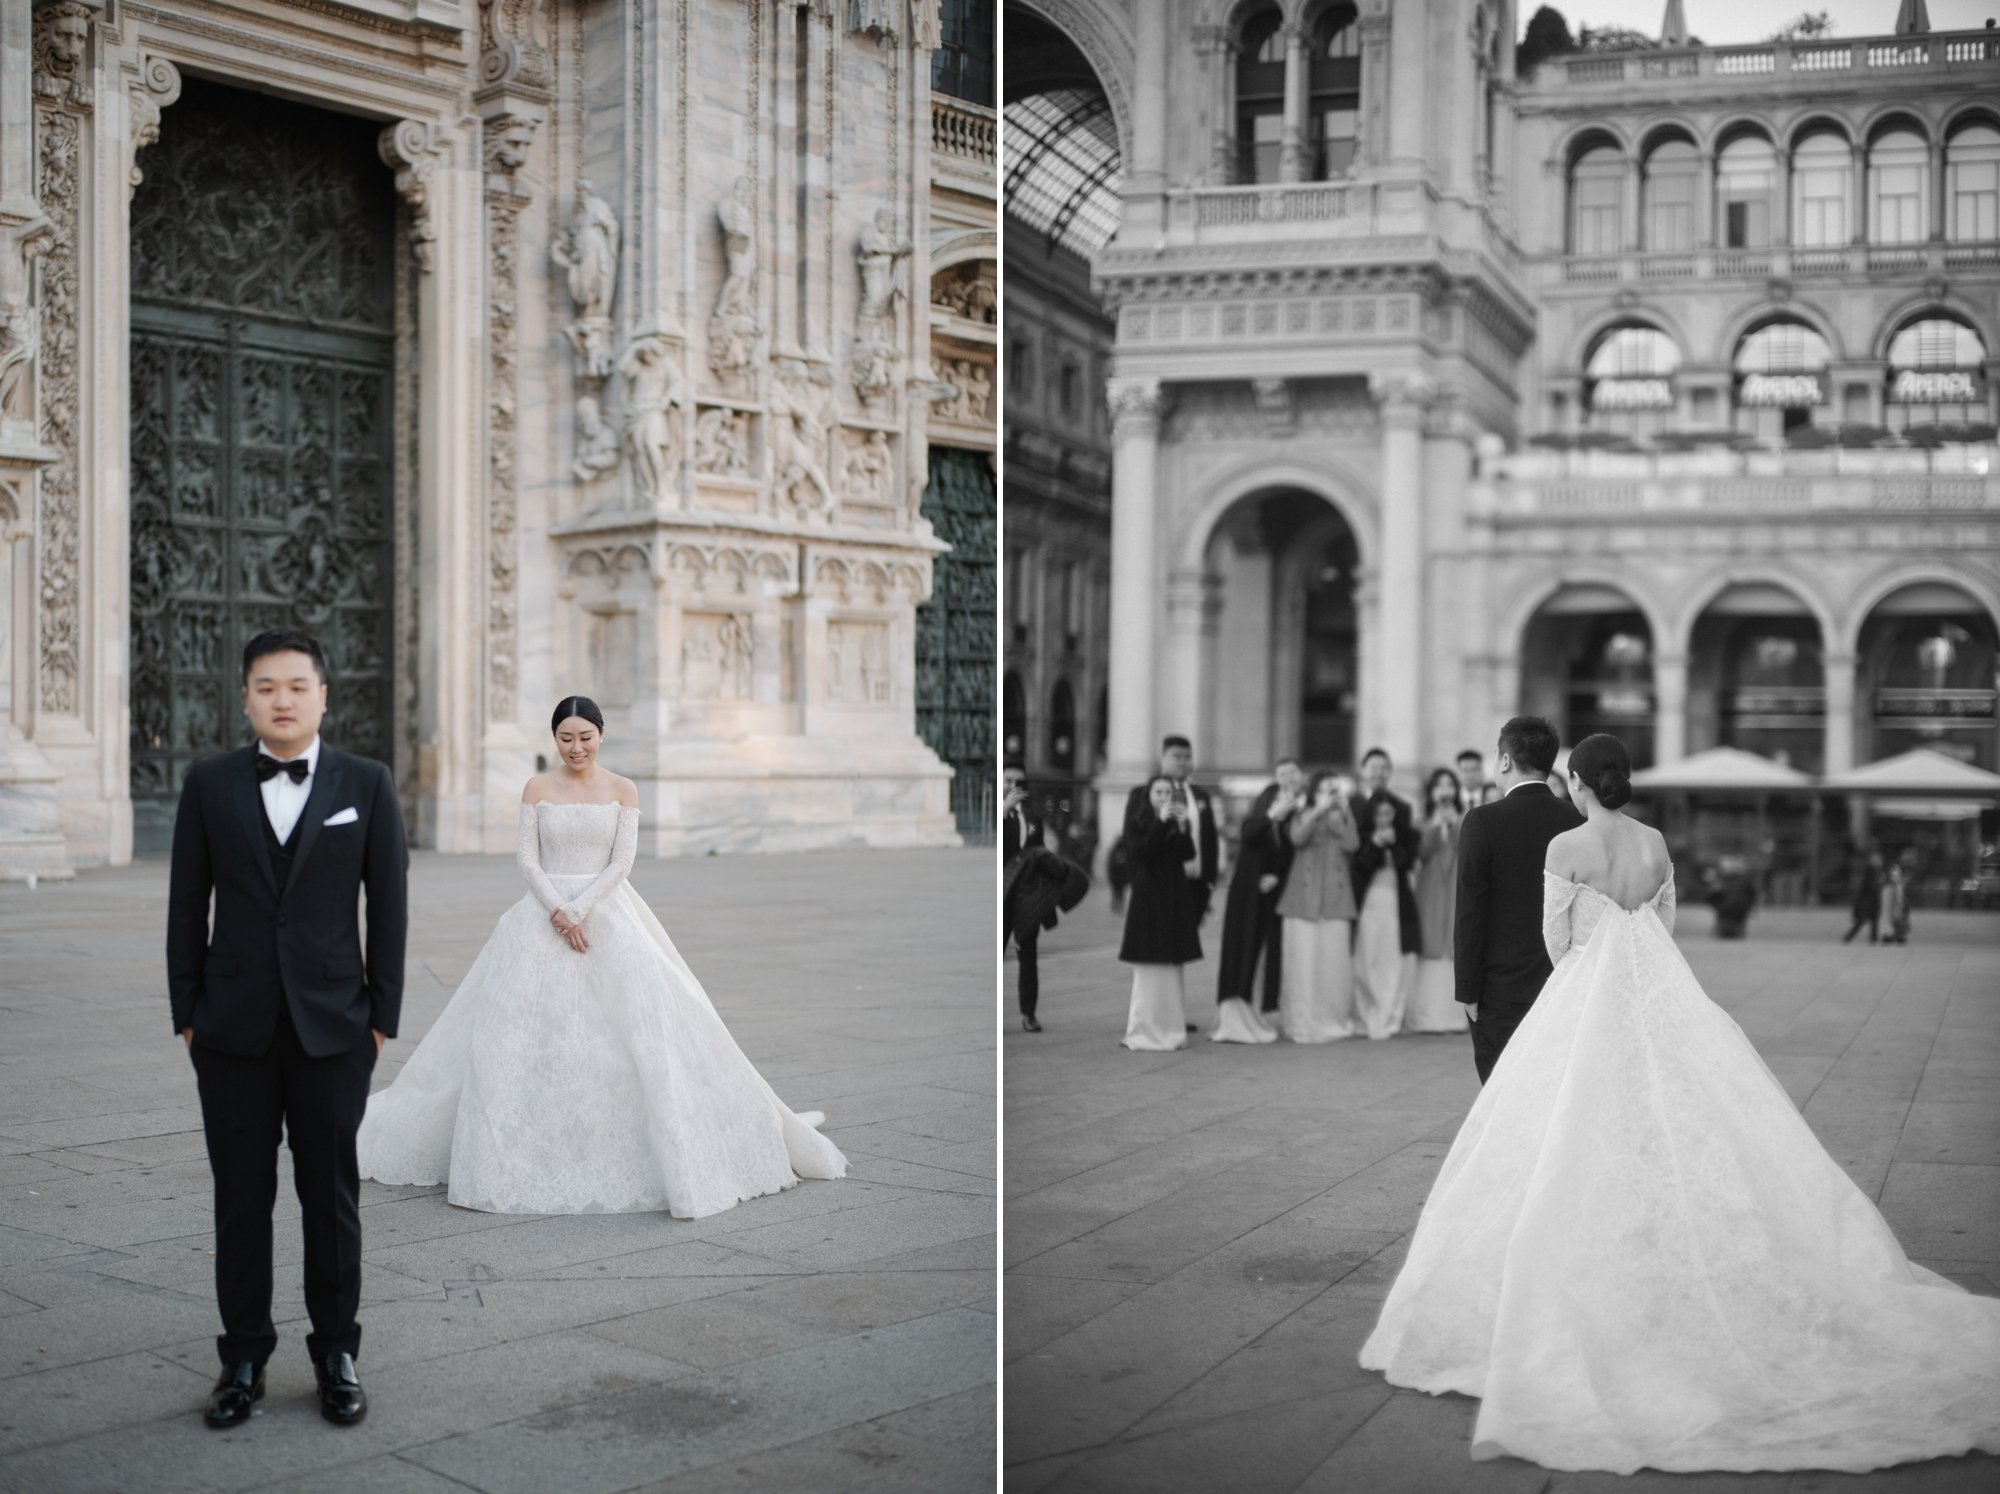 Prawira-Evelyn-Dolomites-Italy-Santre wedding-Yefta Gunawan-Jeriko MUA-Carol Kuntjoro Photography-18.jpg